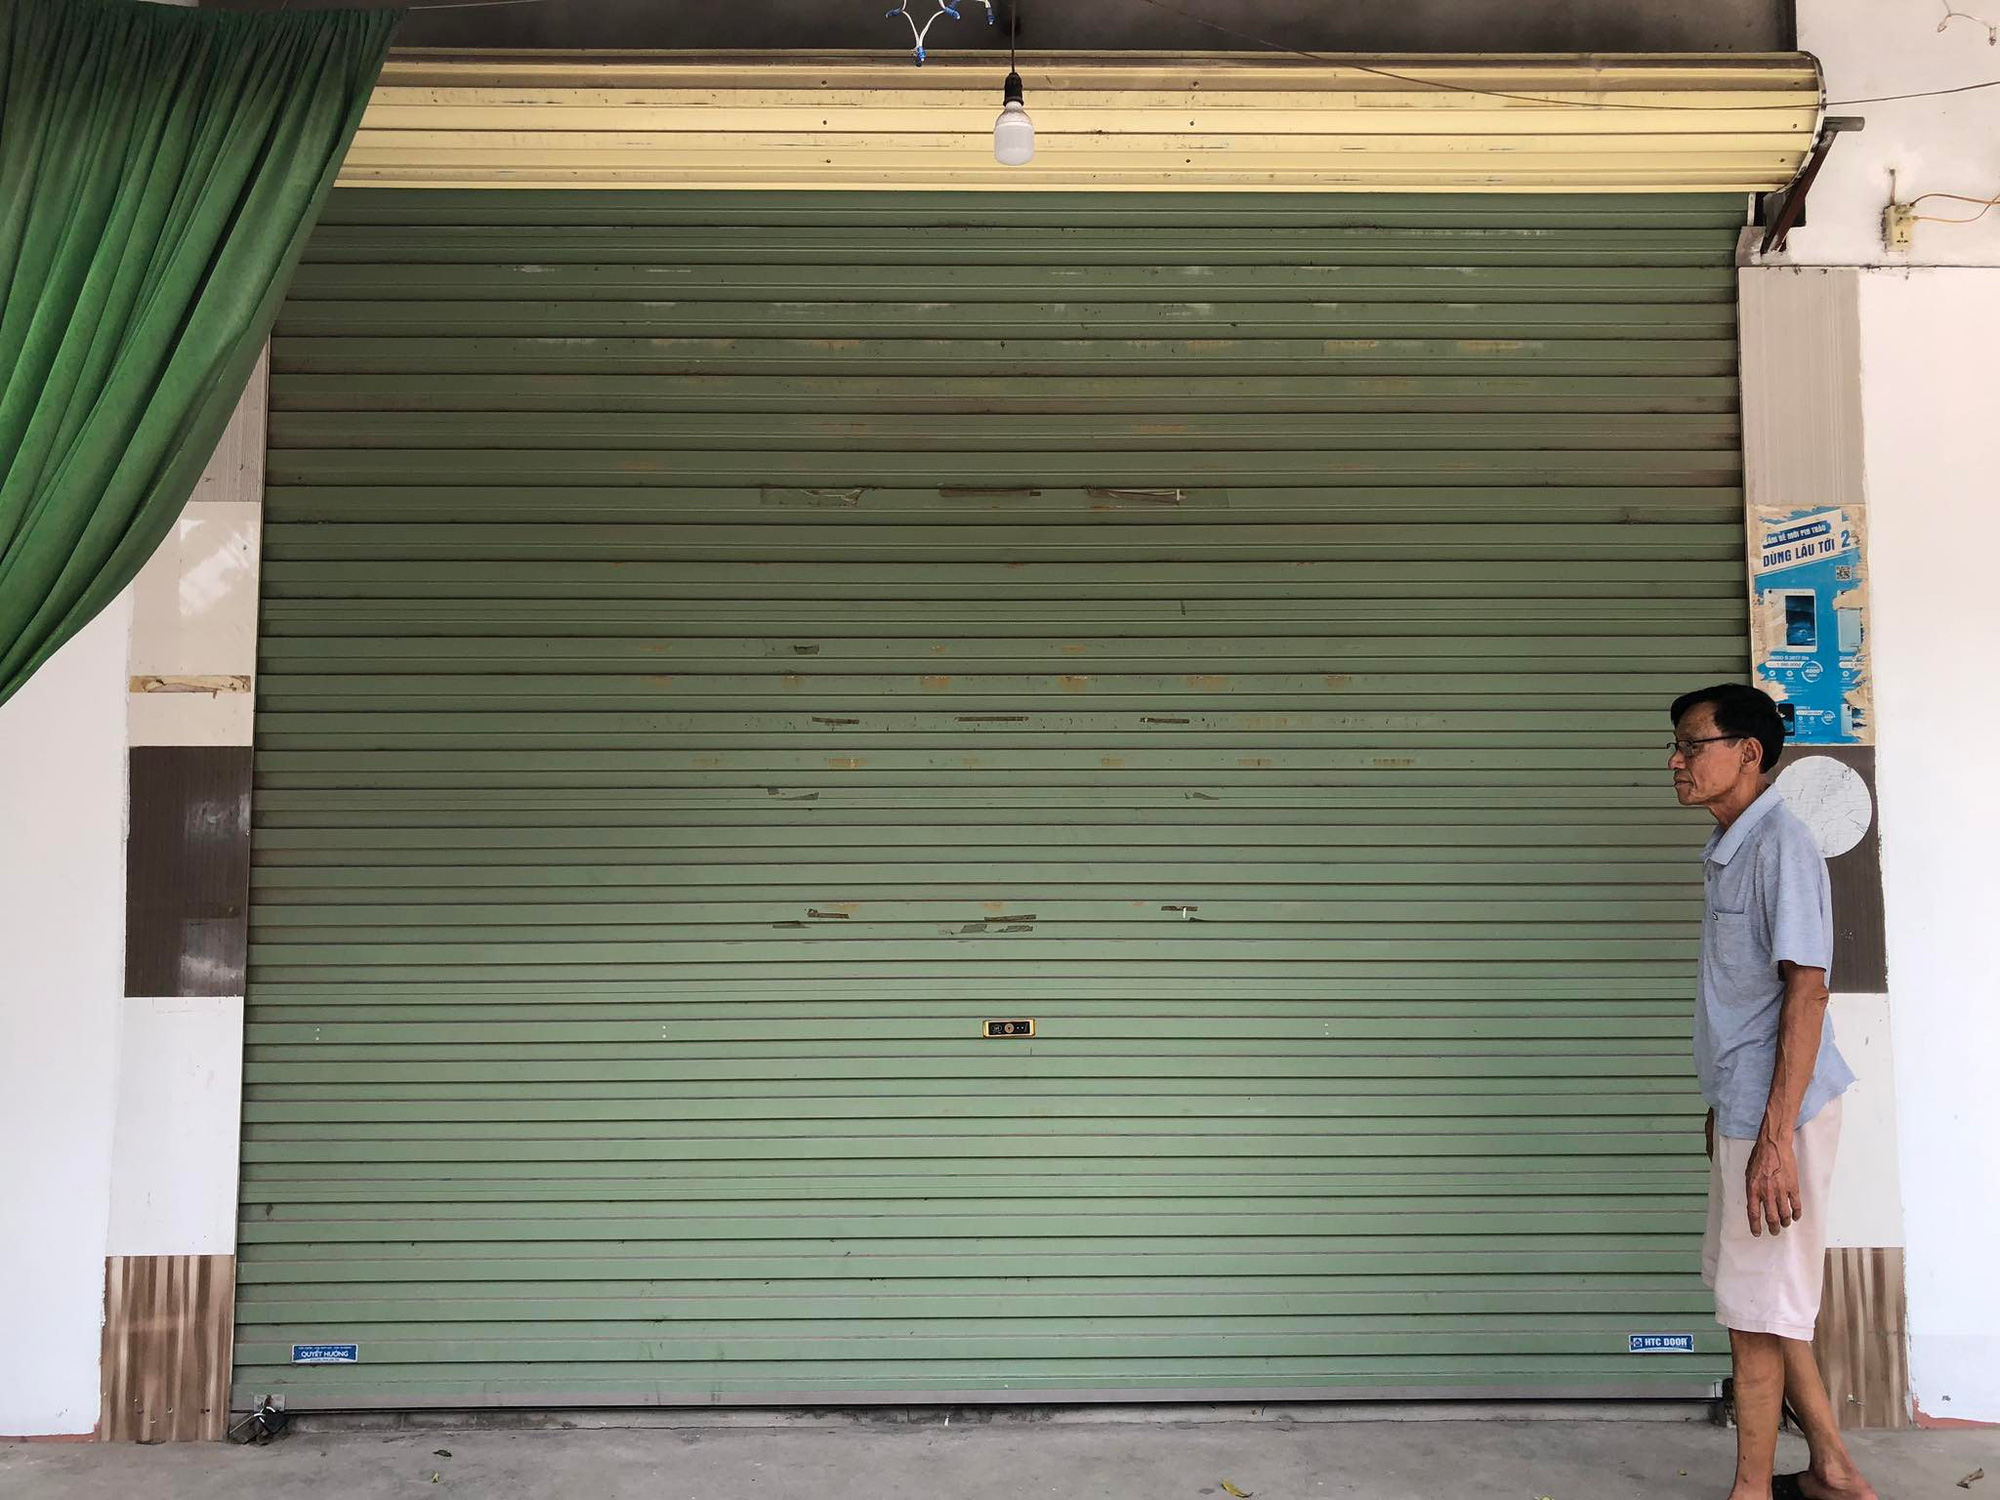 The milk tea shop where the incident took place. Photo: Pham Phan / Tuoi Tre